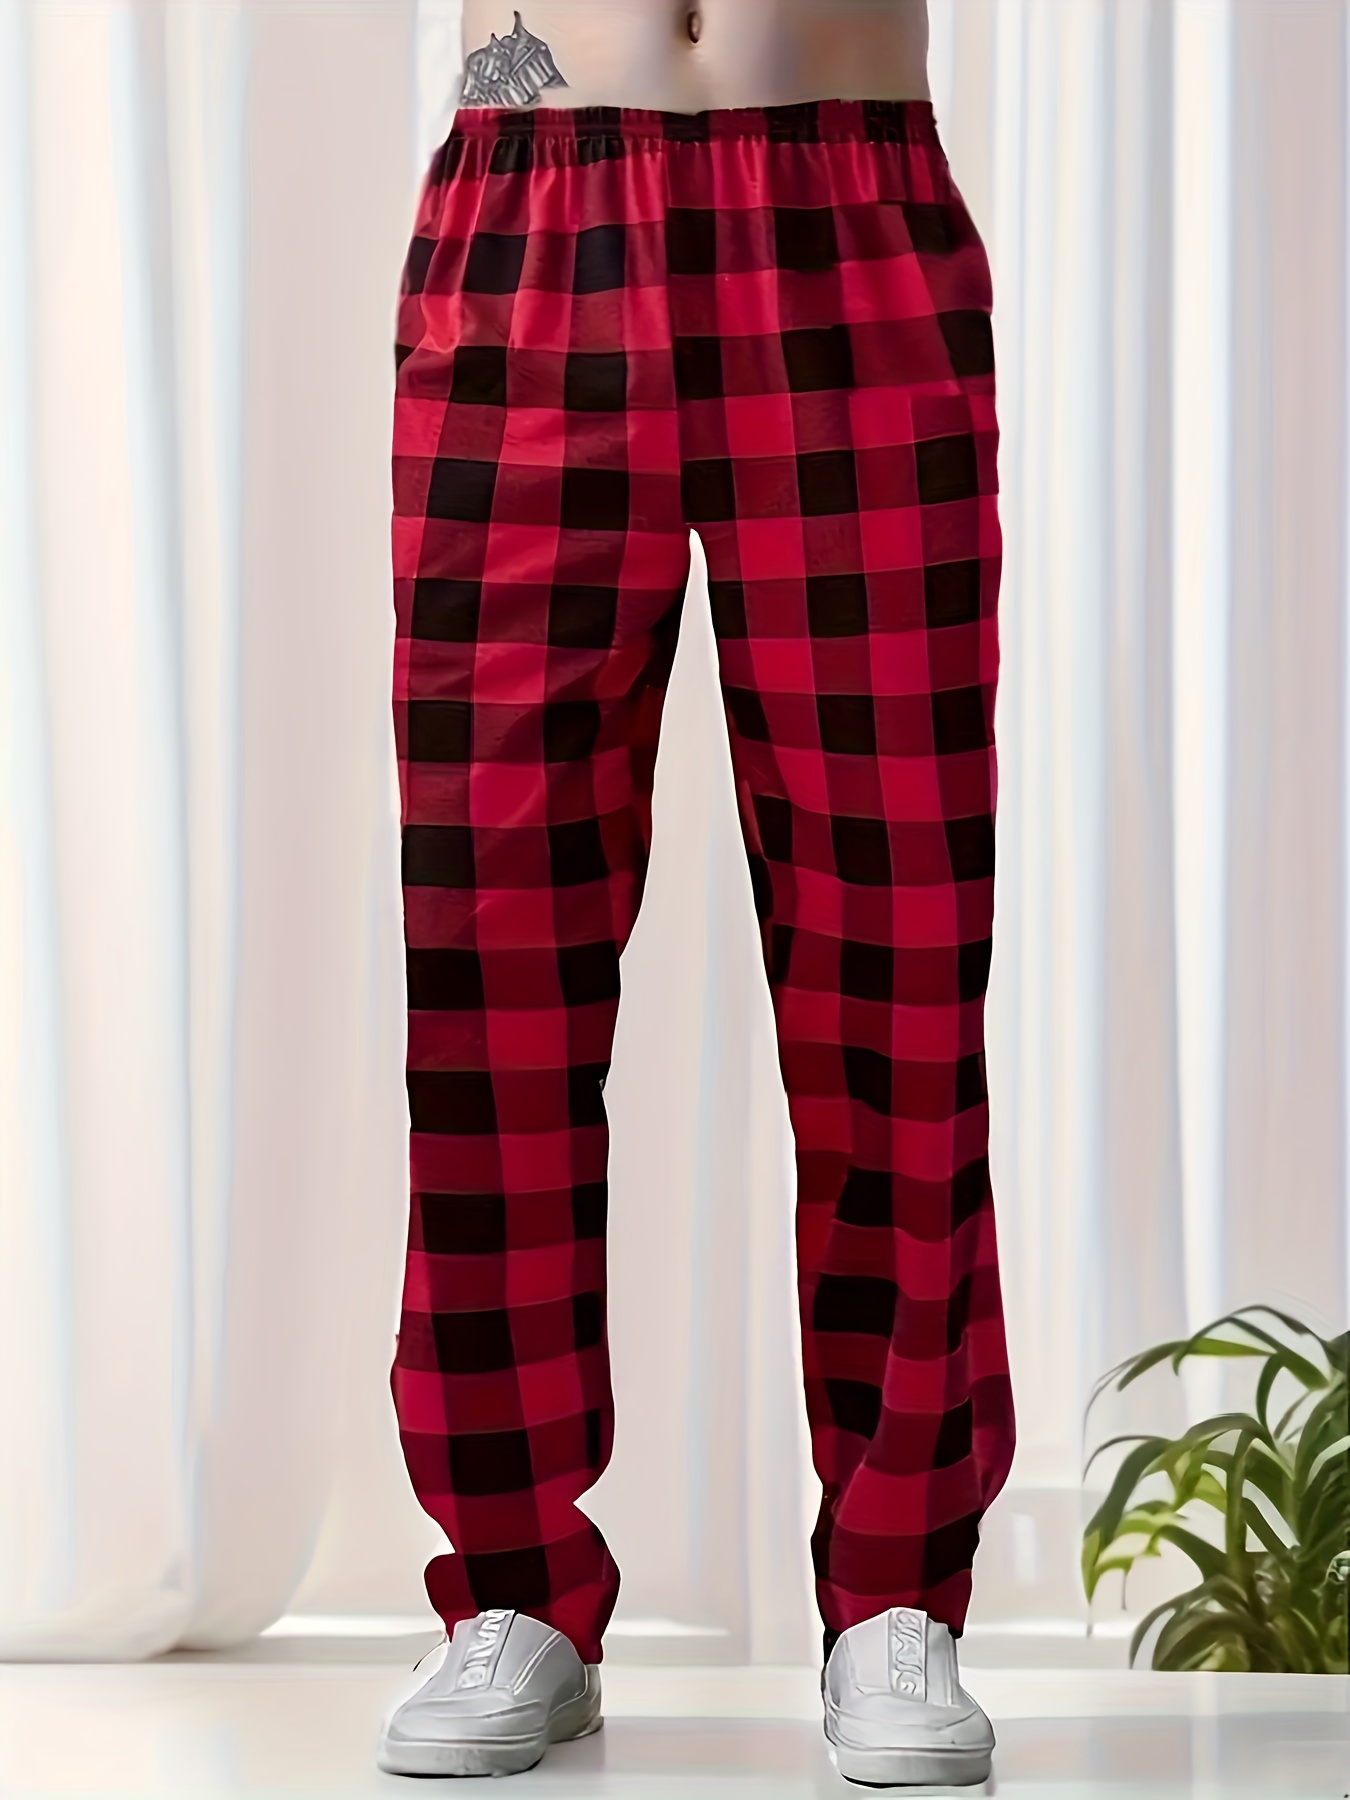 Red Black Plaid Women's Pajama Pants, Red Pj Bottoms, Red Checkered  Pjswomen's Sleep Pantsred Pj Bottoms 